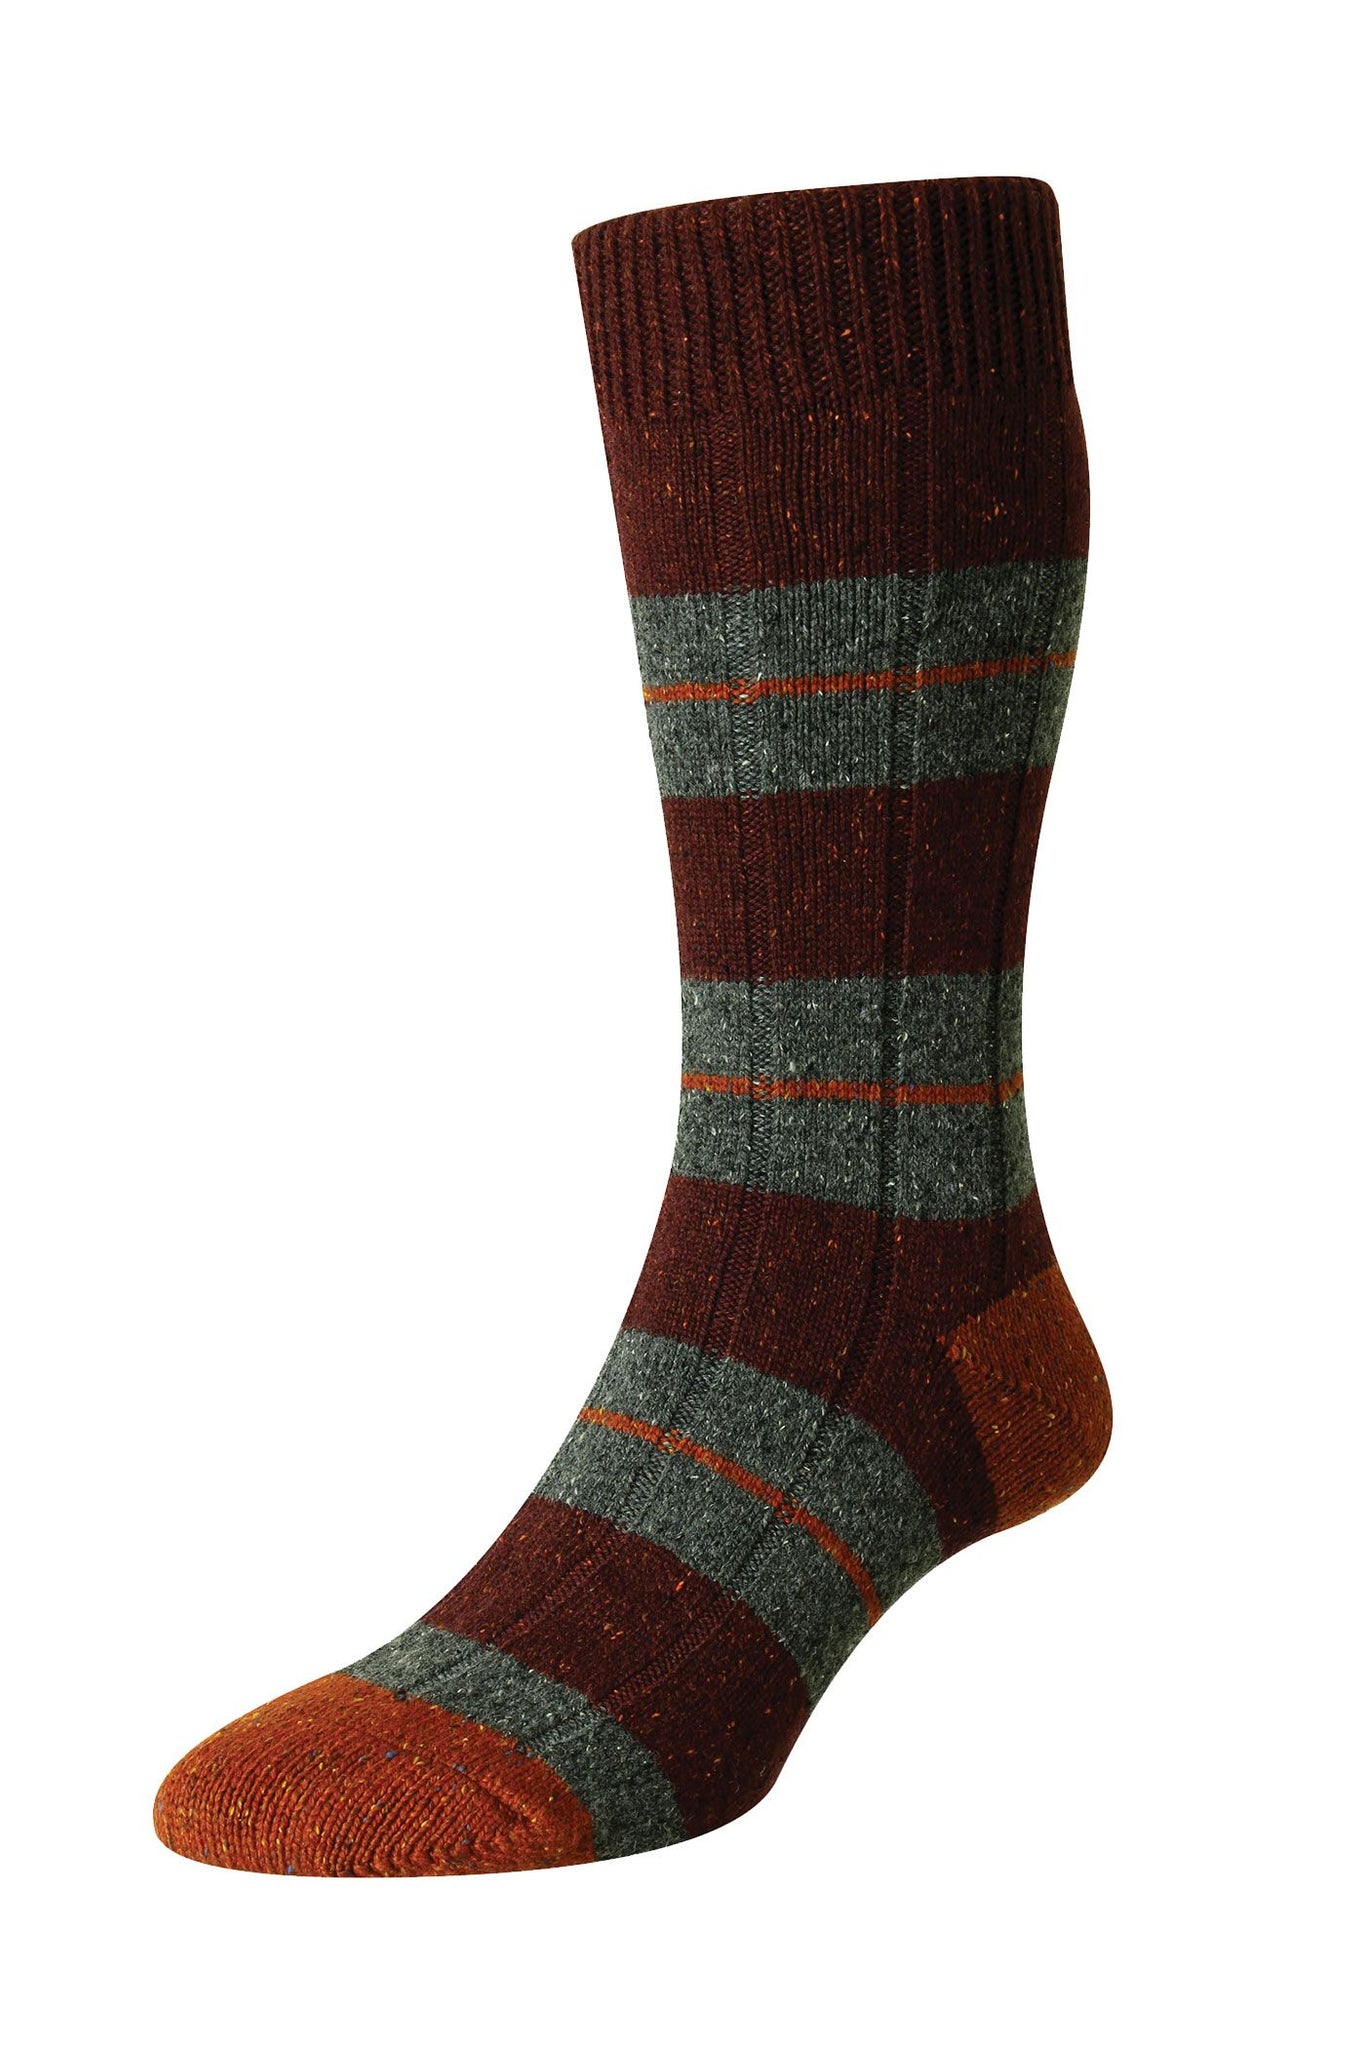 Scott-Nichol - Wool Socks - Maroon Fleck - Grey and Maroon Stripe